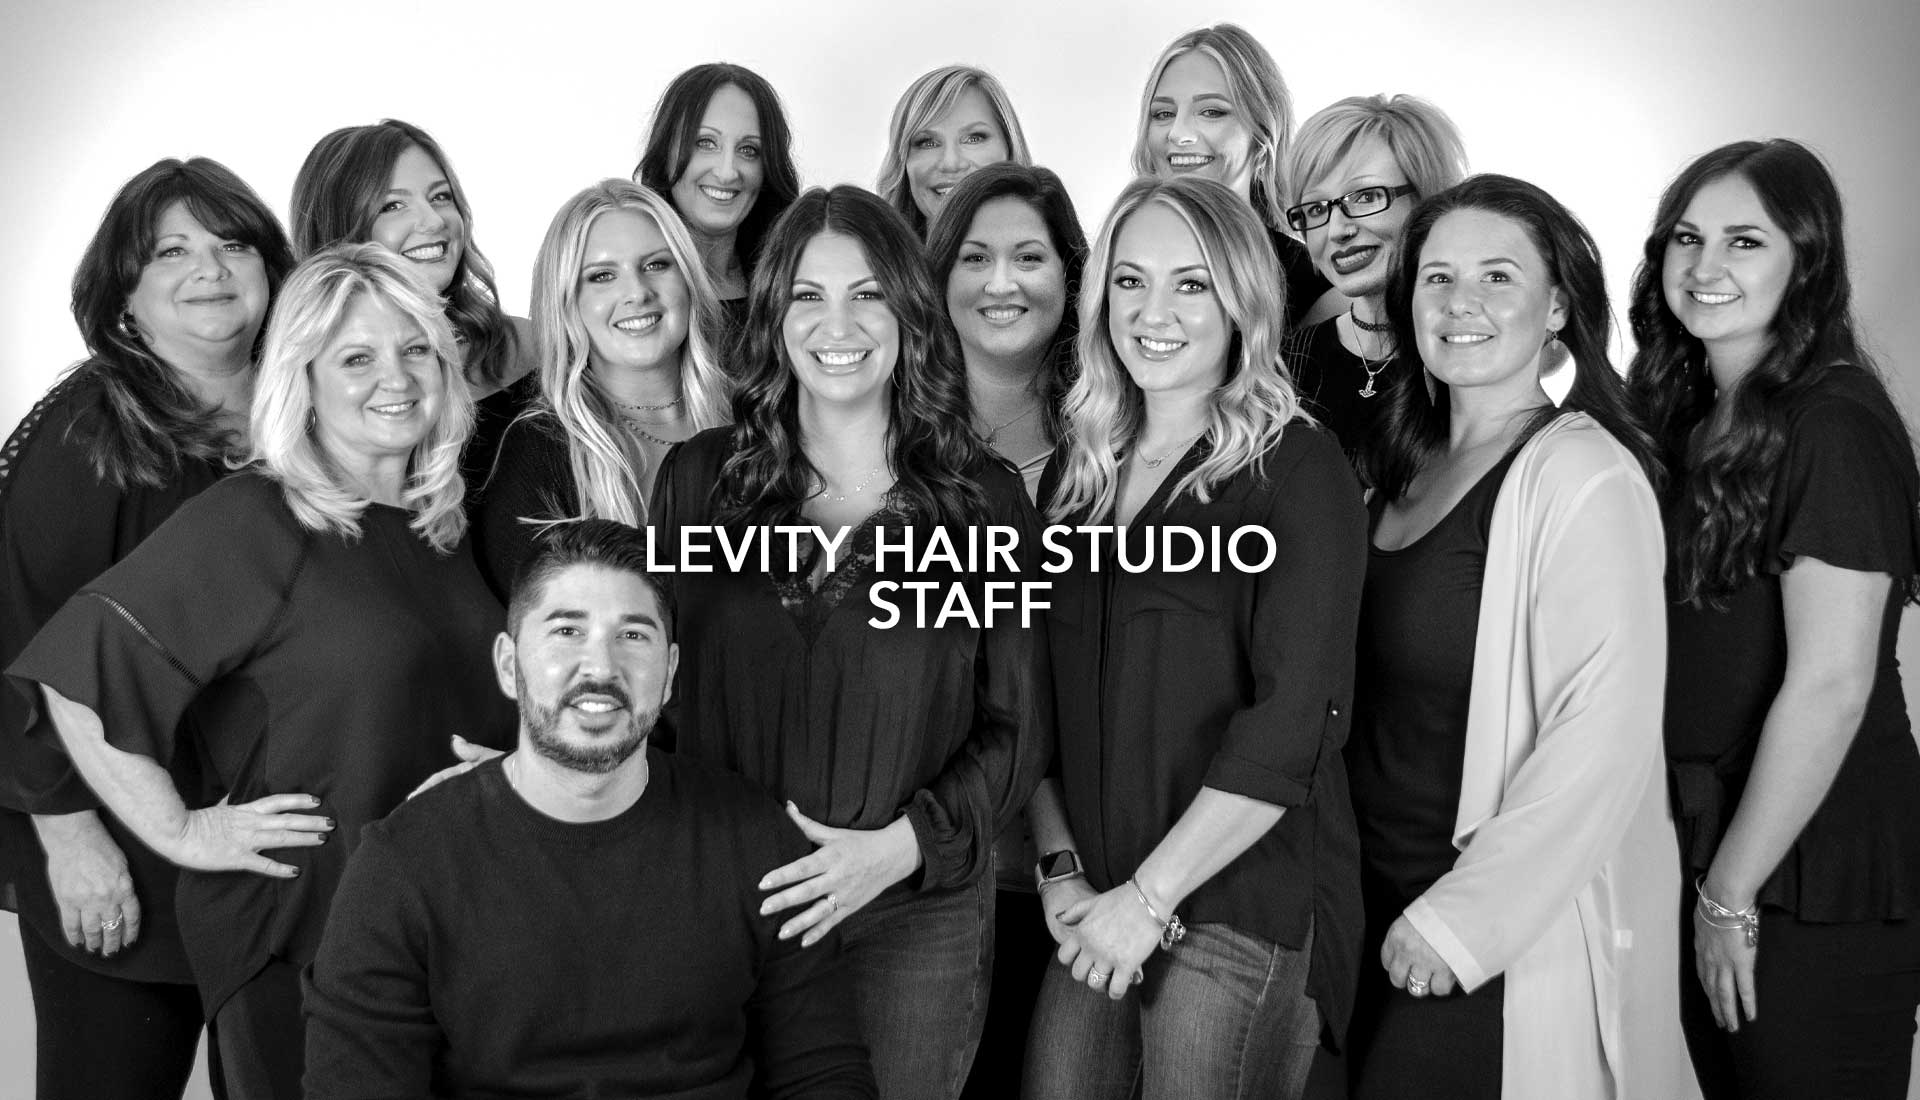 Levity Hair Studio Staff Employees